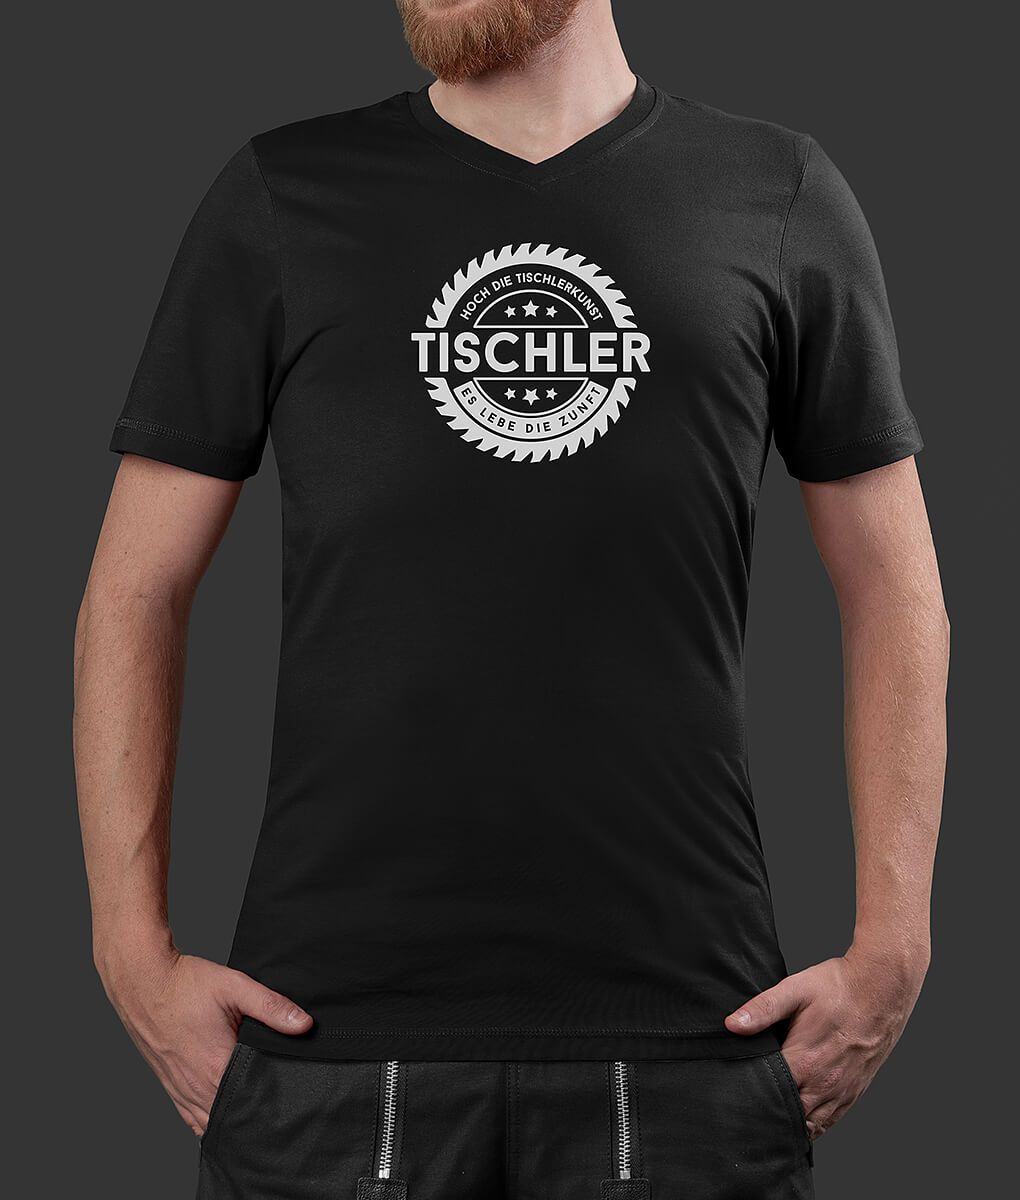 T-Shirt Philipp Tischler Sge Brust